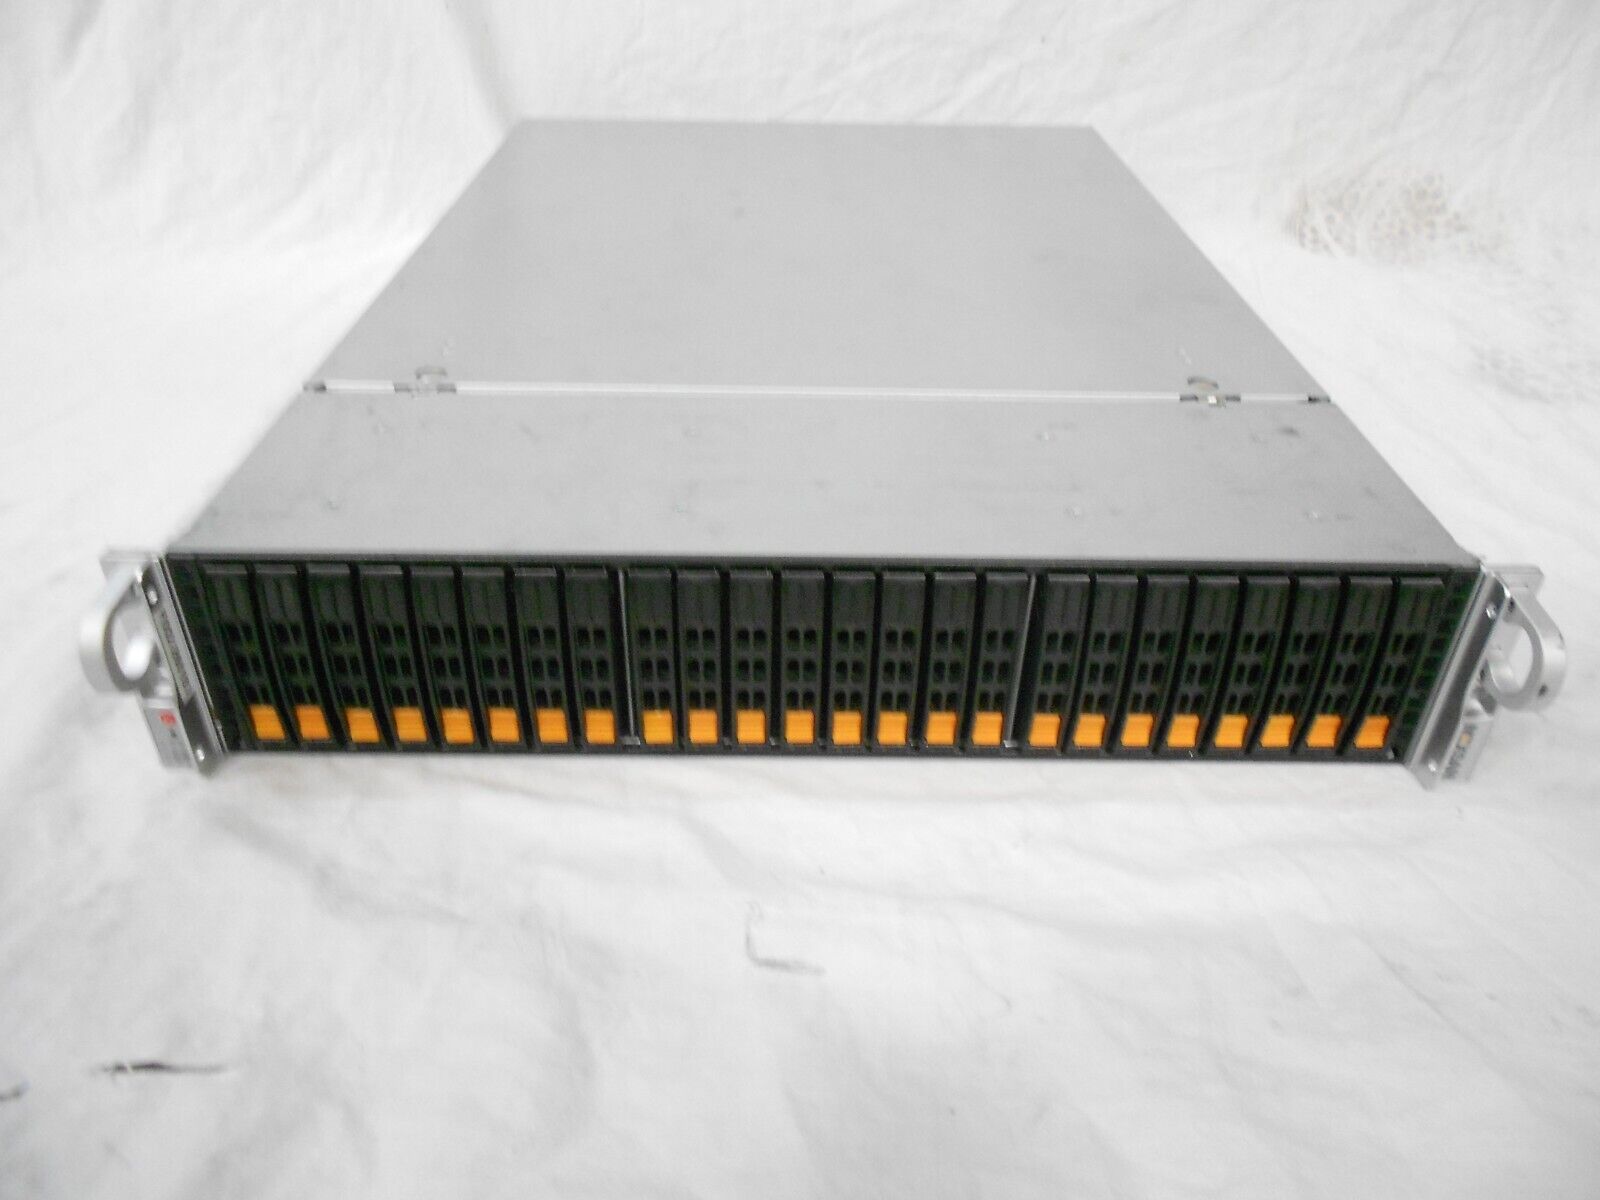 SuperMicro X10DRH-IT CSE-216 Server 16x 1.6TB 2.5 SSD 6G 2x E5-2620v4 128GB